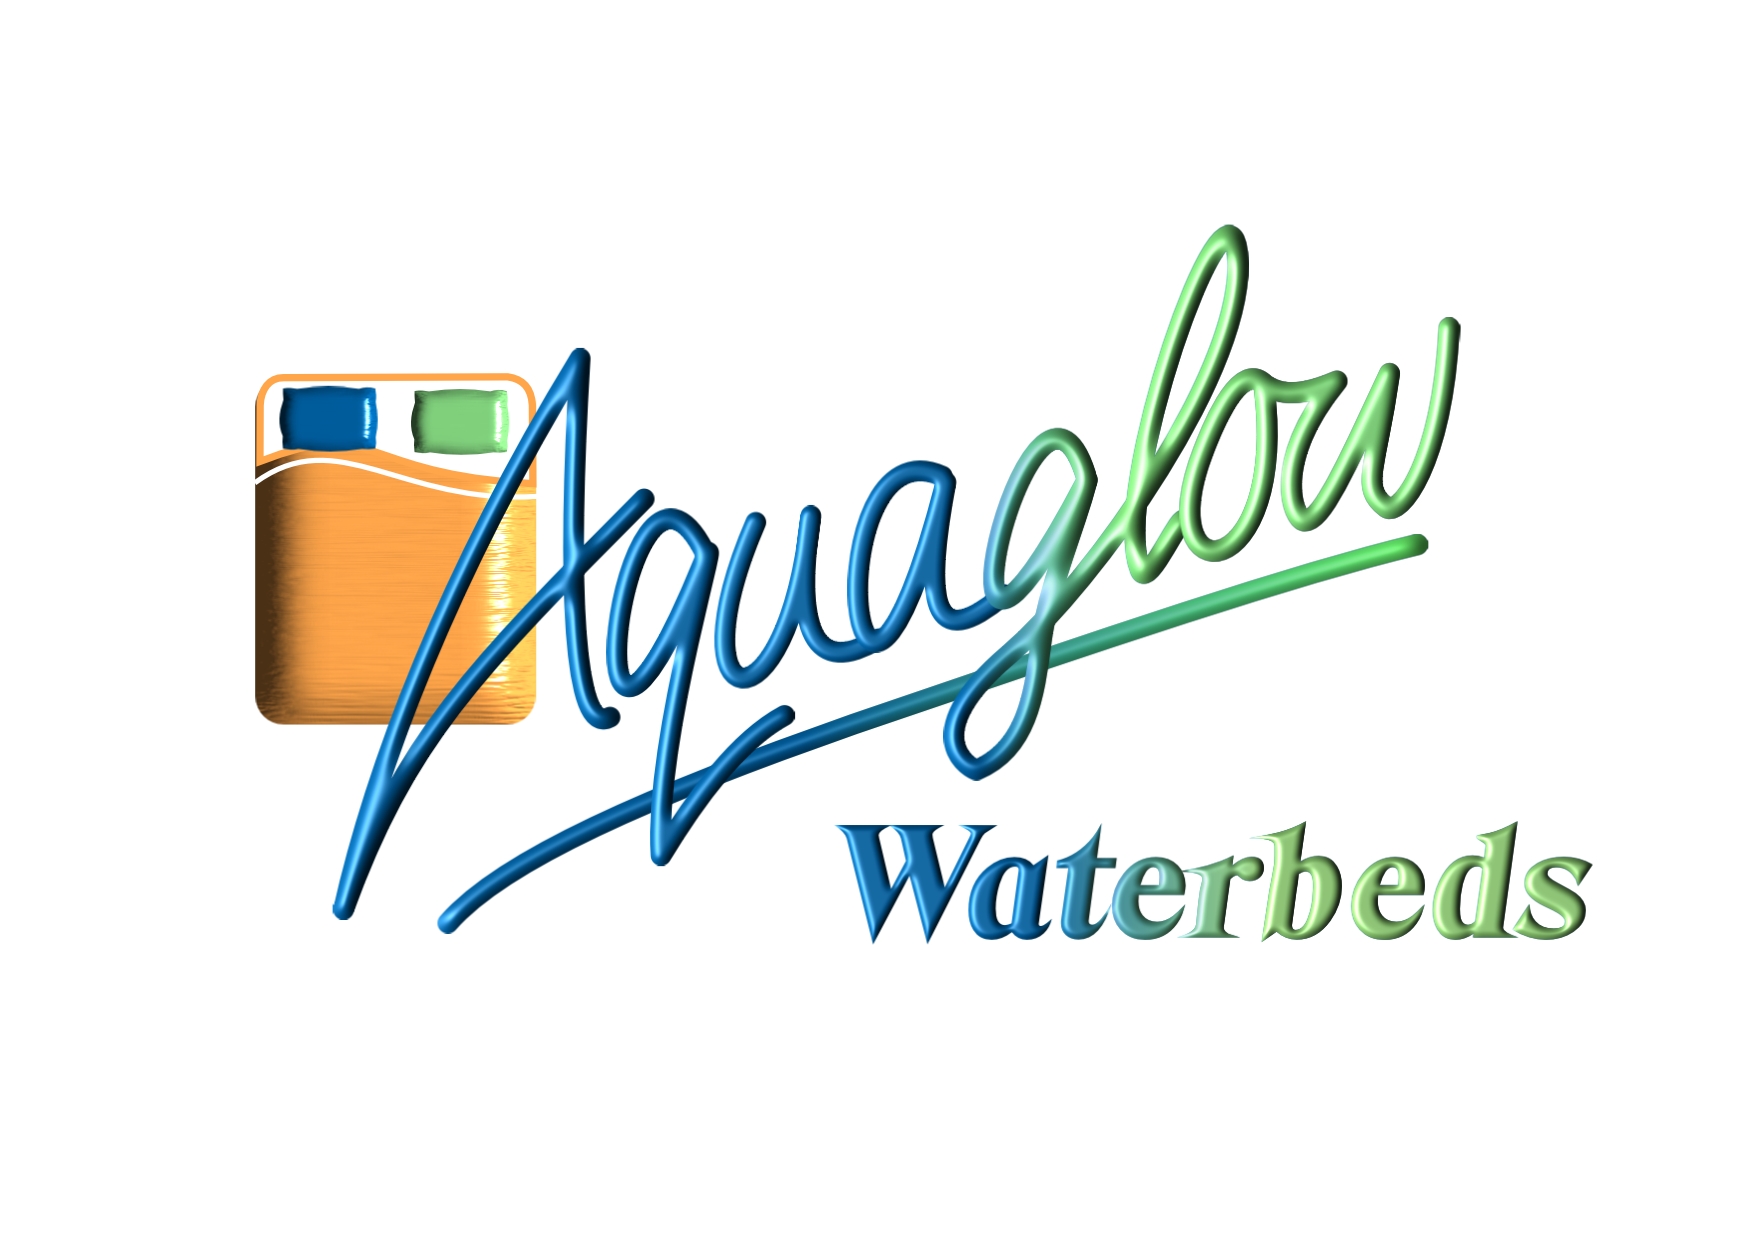 (c) Aquaglowwaterbeds.co.uk